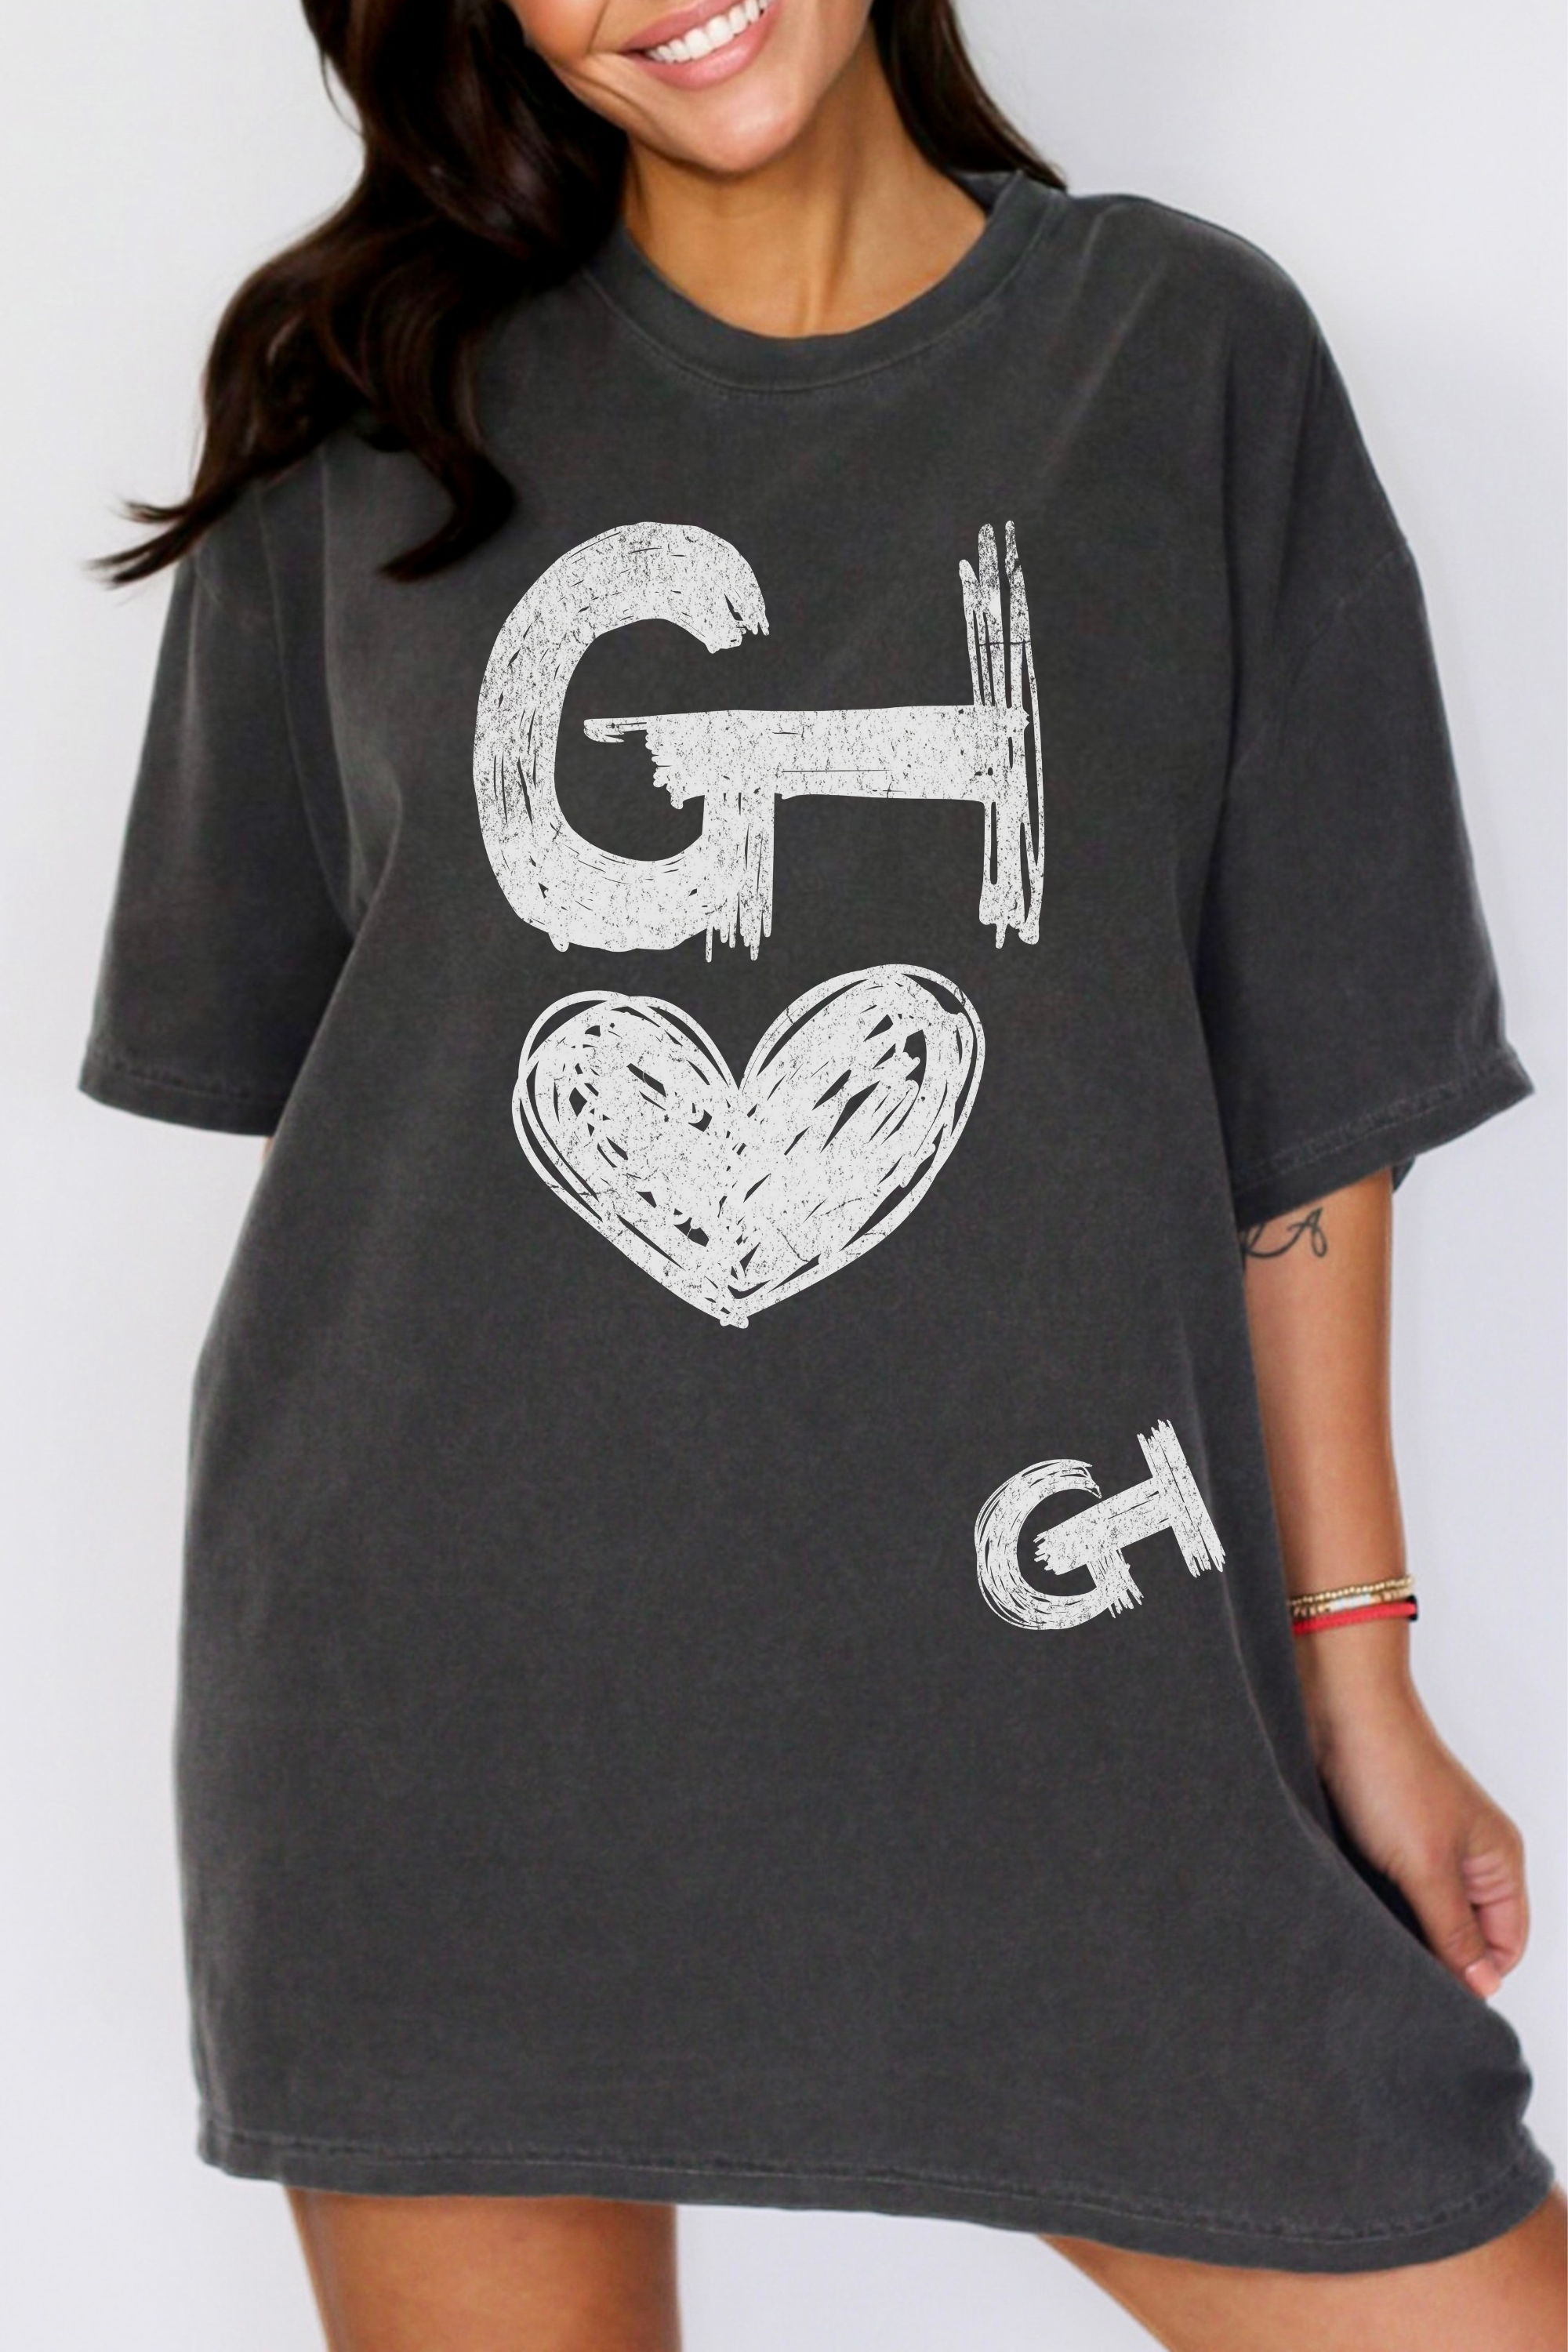 GOLDxTEAL stylish logo heart t-shirt.